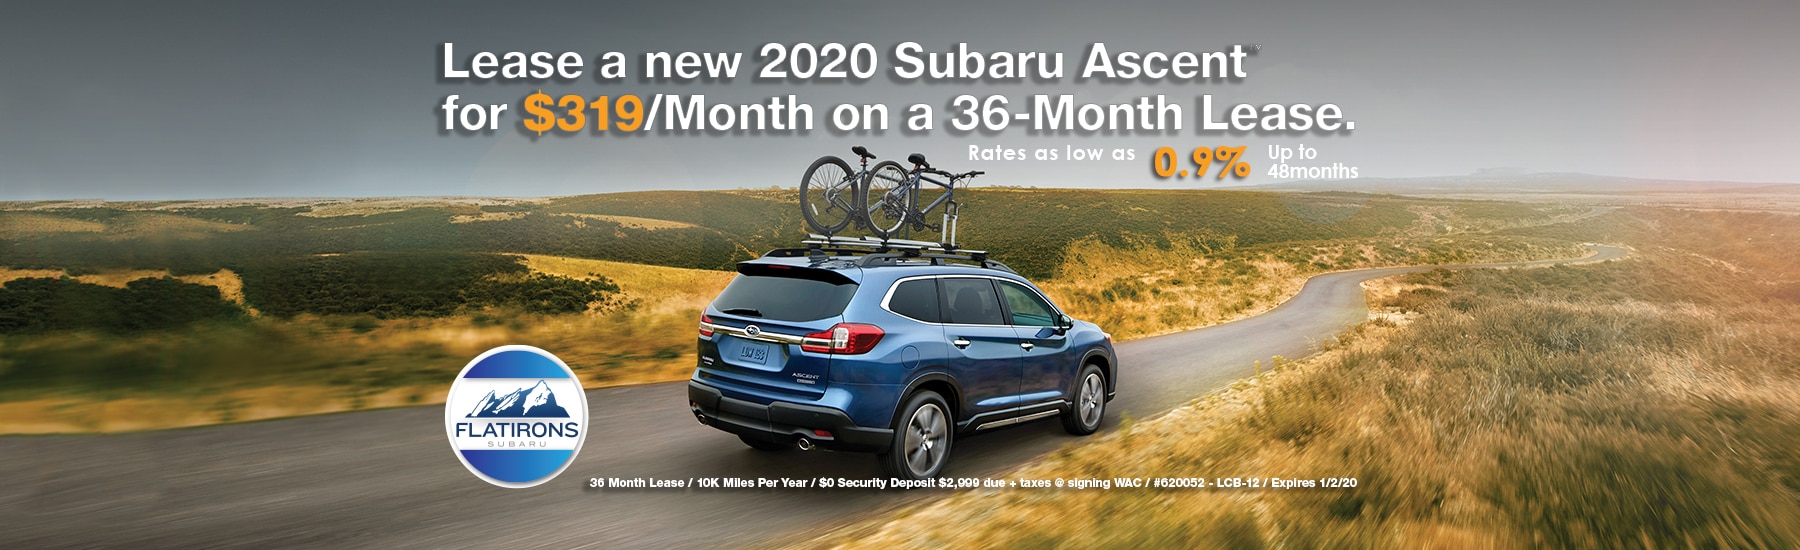 2020 Subaru Ascent Special near Jamestown CO